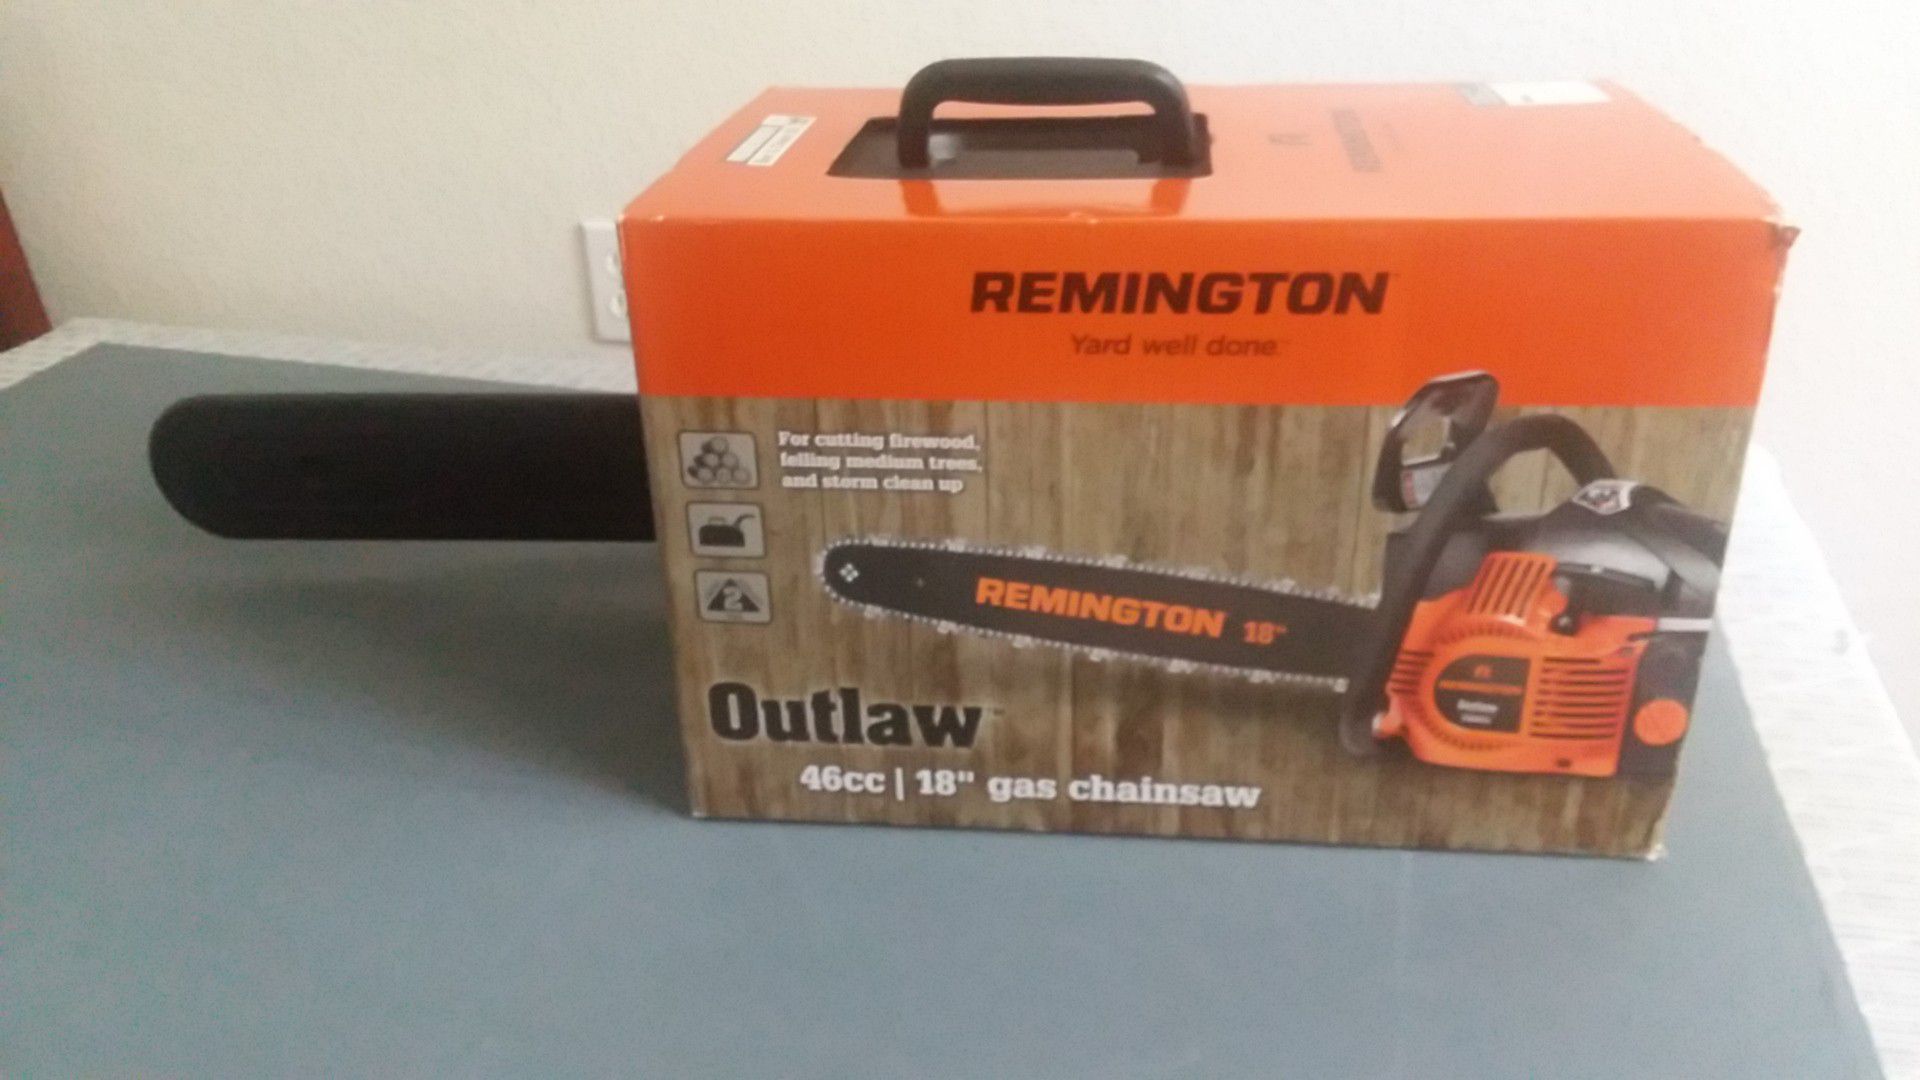 Remington Chainsaw Amazing!! Just lowered my price